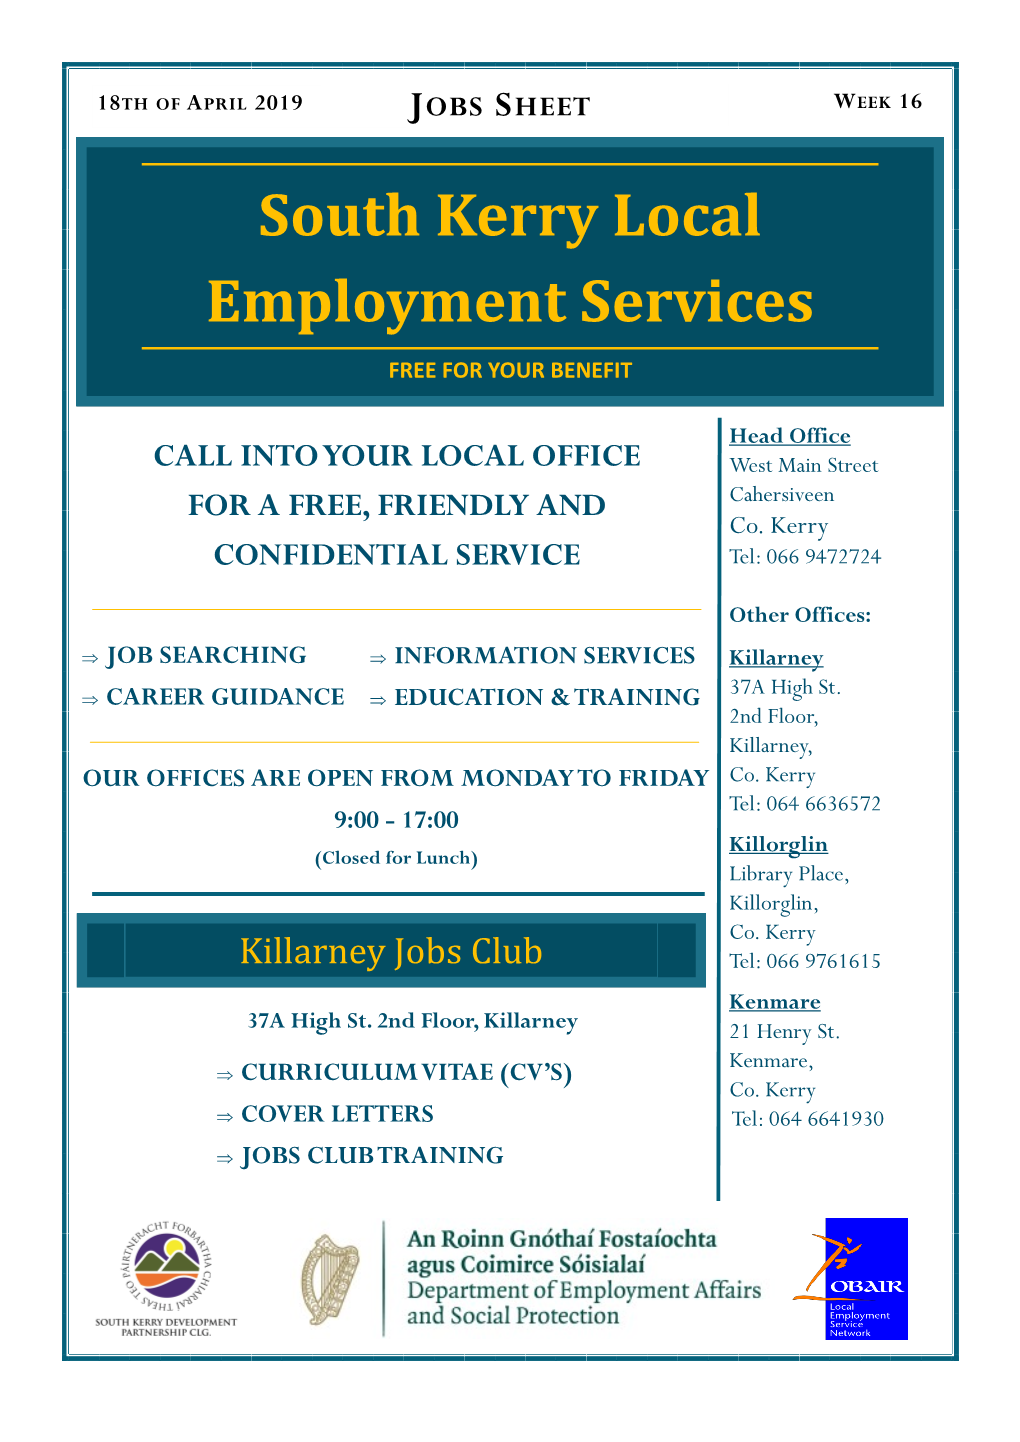 JOBS SHEET WEEK 16 South Kerry Local Employment Services